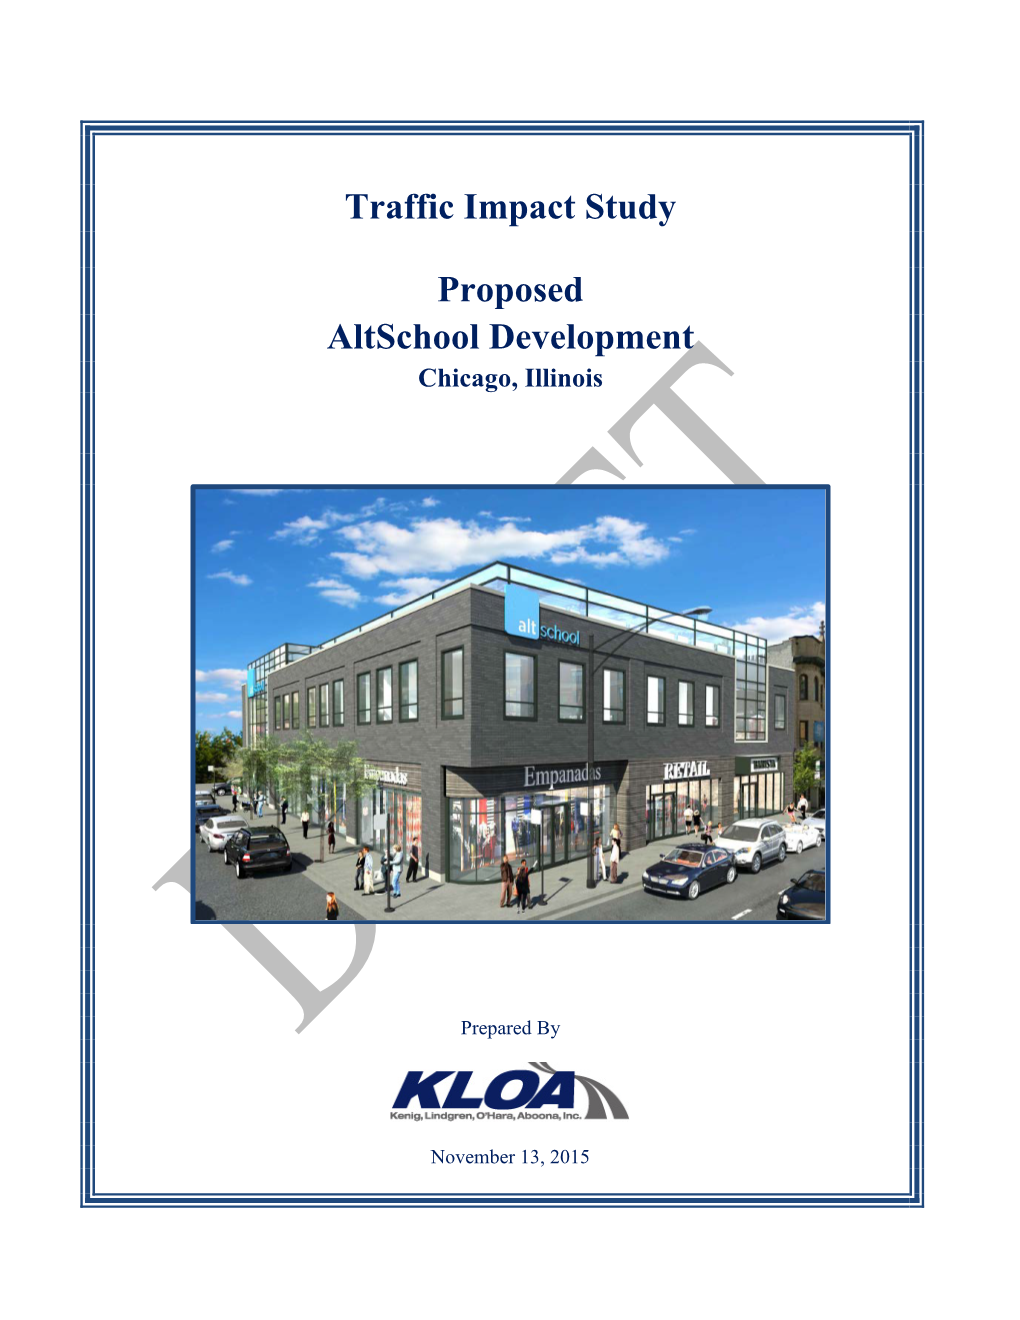 Traffic Impact Study Proposed Altschool